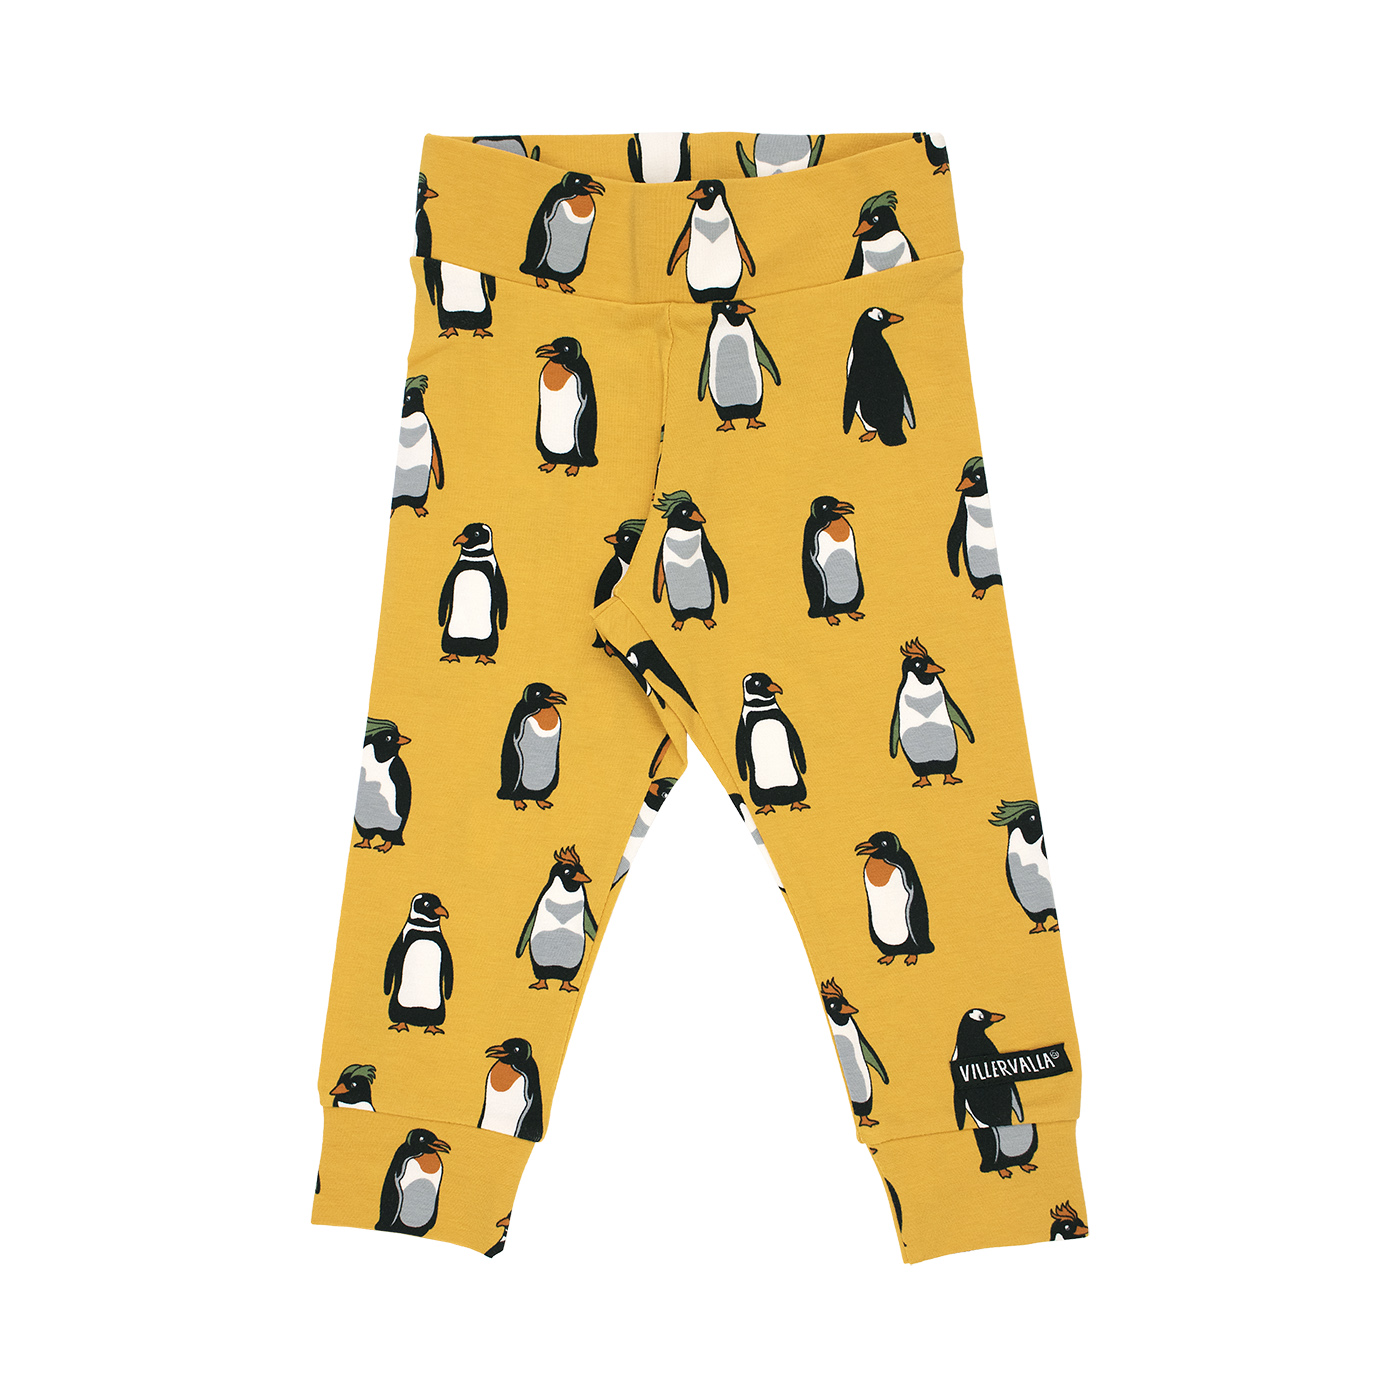 Details more than 243 penguin trousers super hot